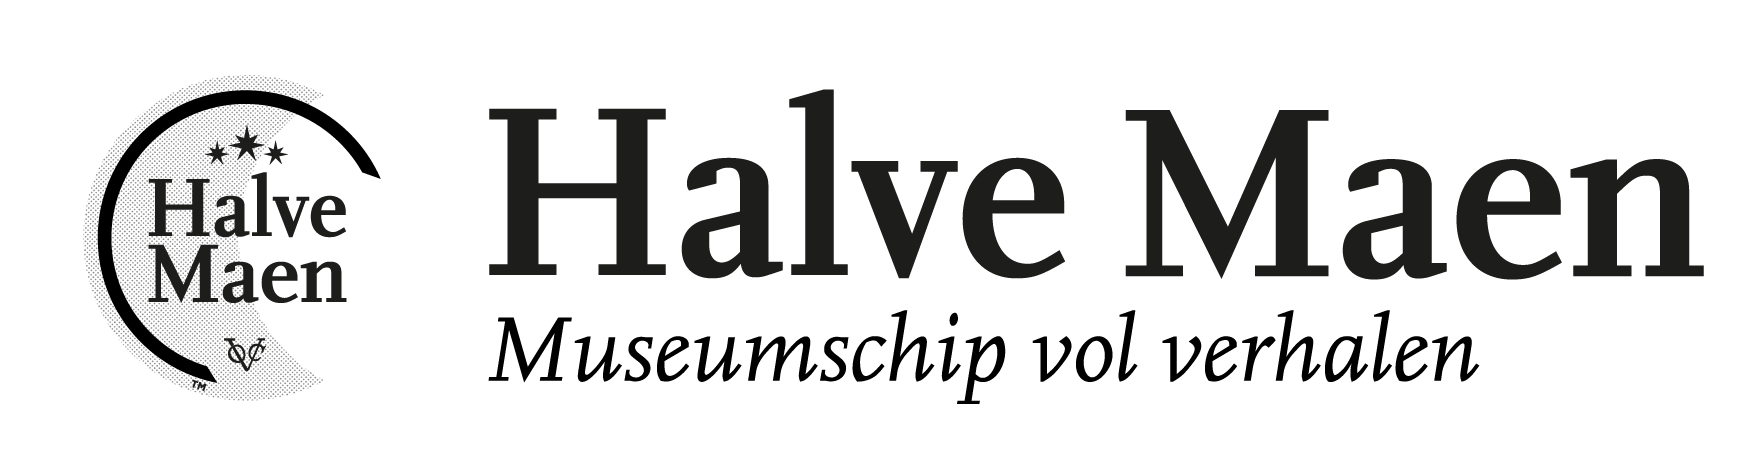 HalveMaen+MuseumschipVerhalen